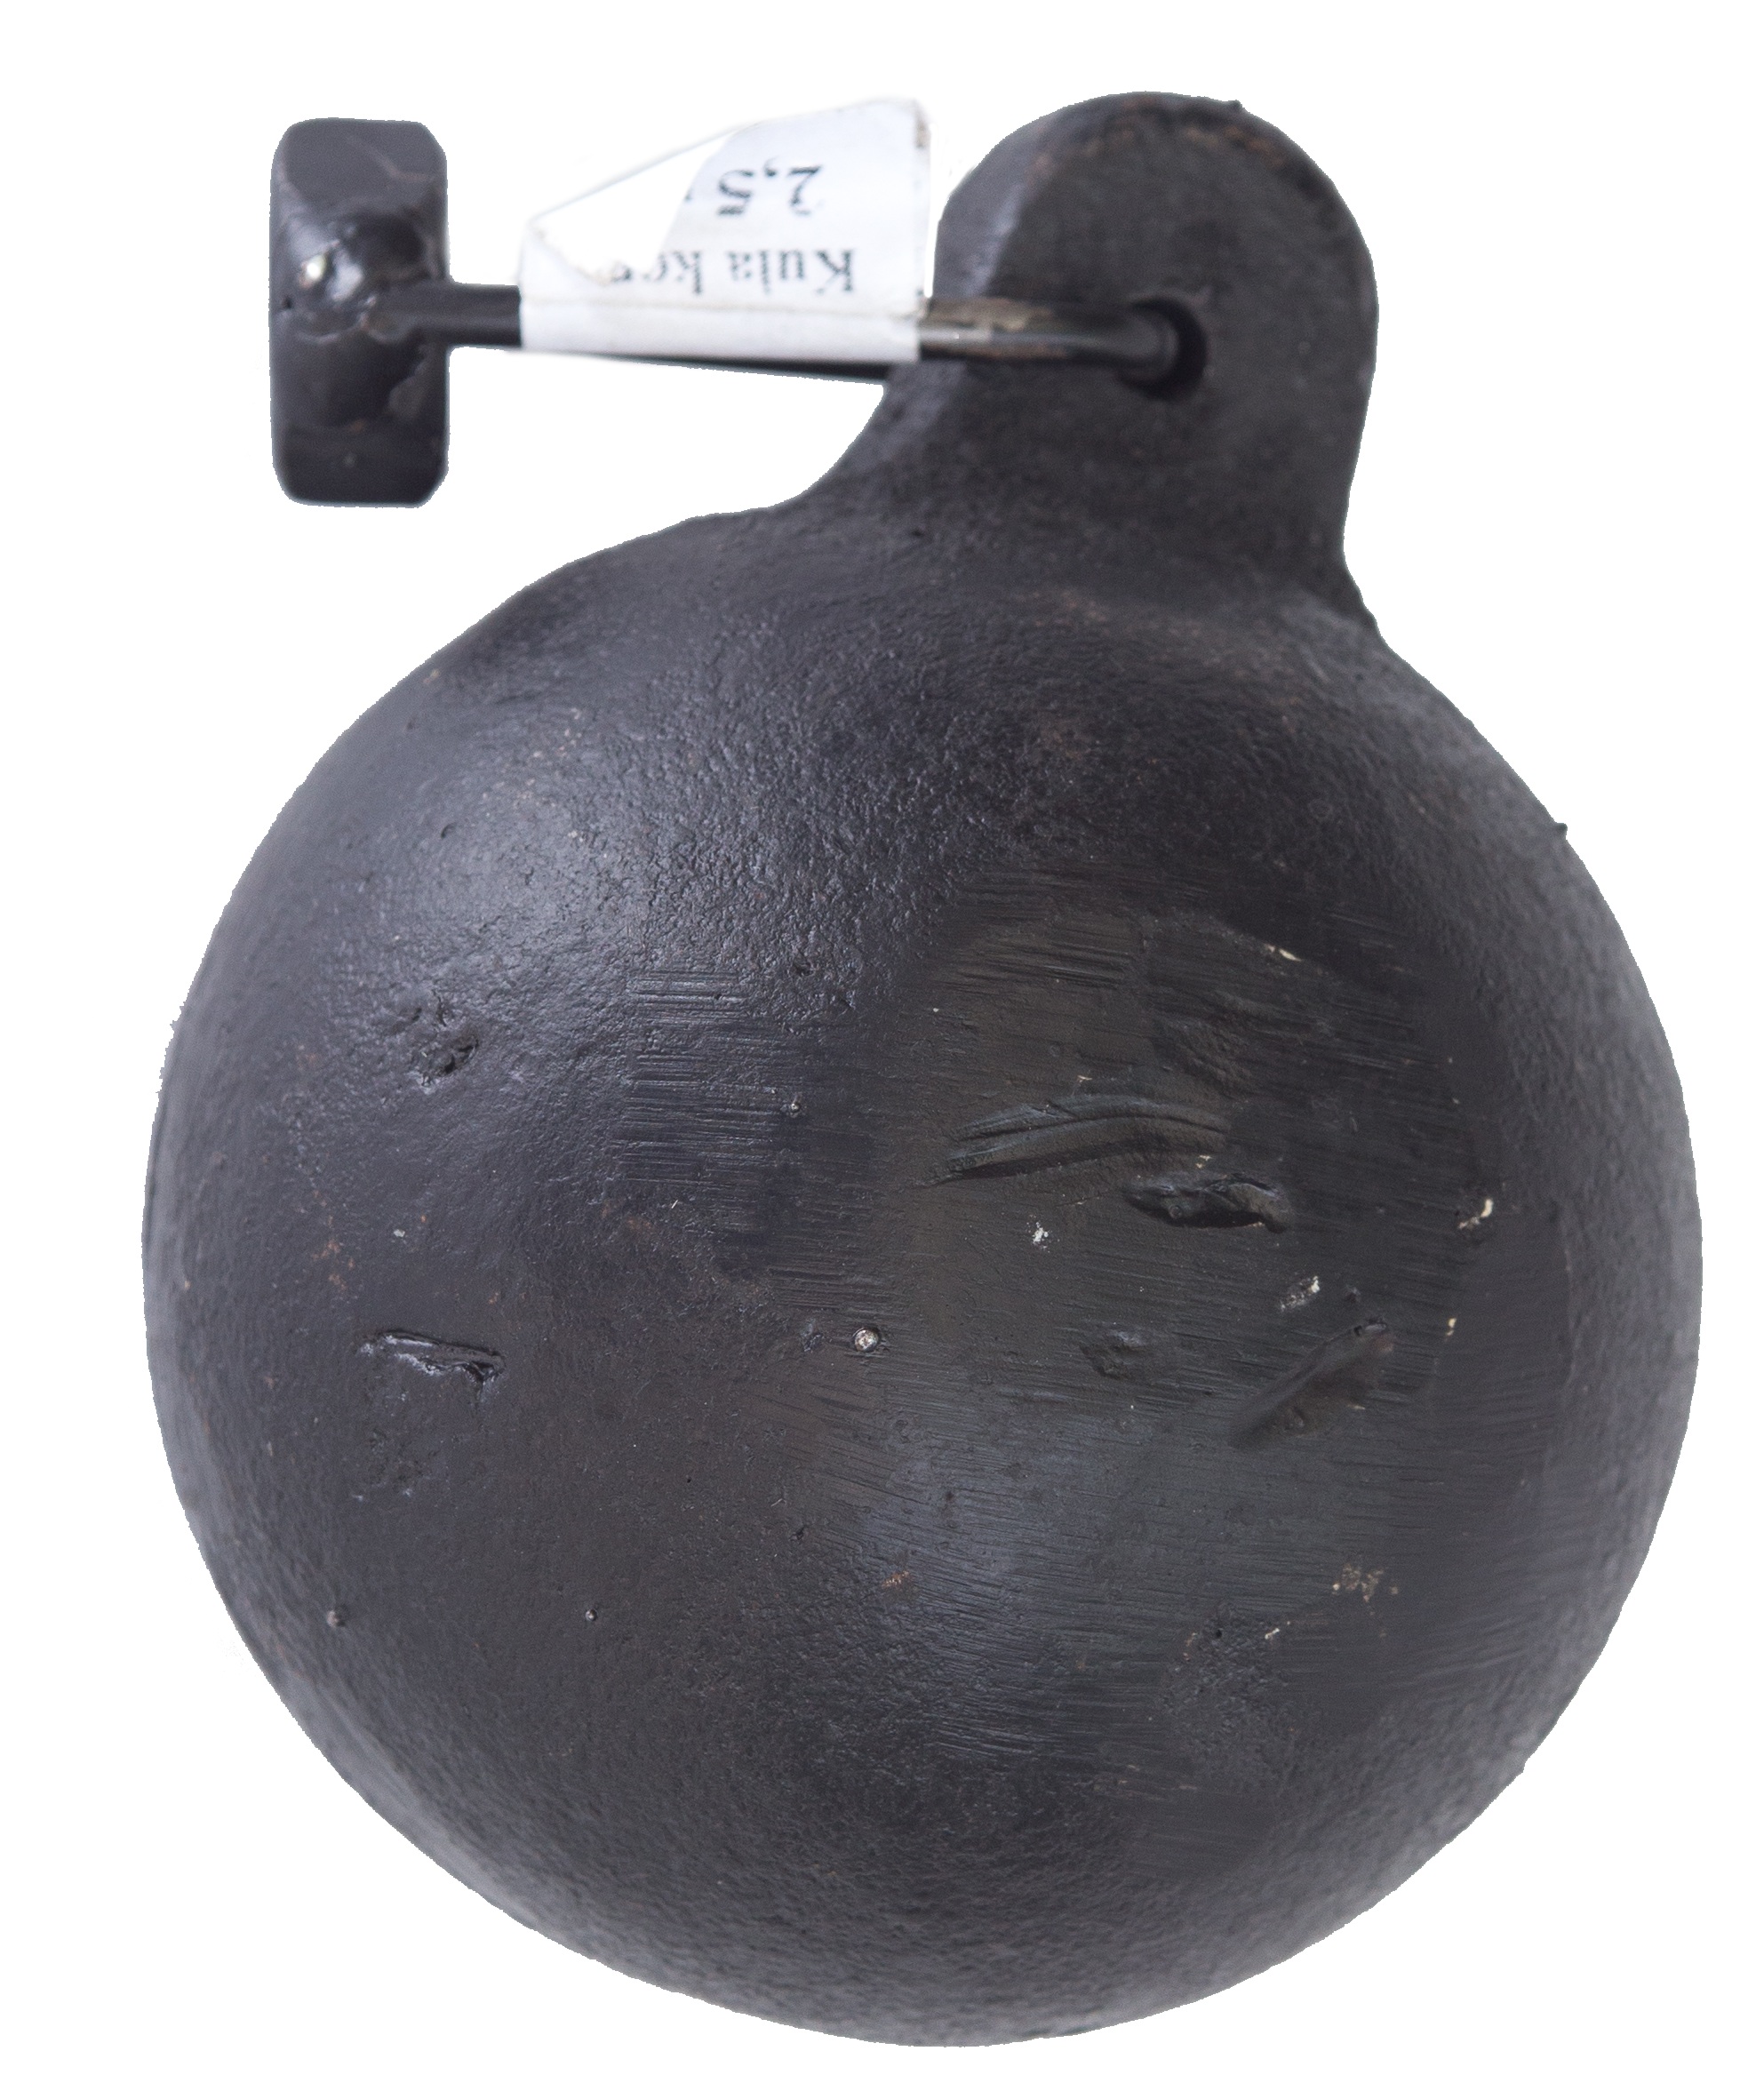 Металлический шар для утяжеления щеток дымохода - 2,5 кг